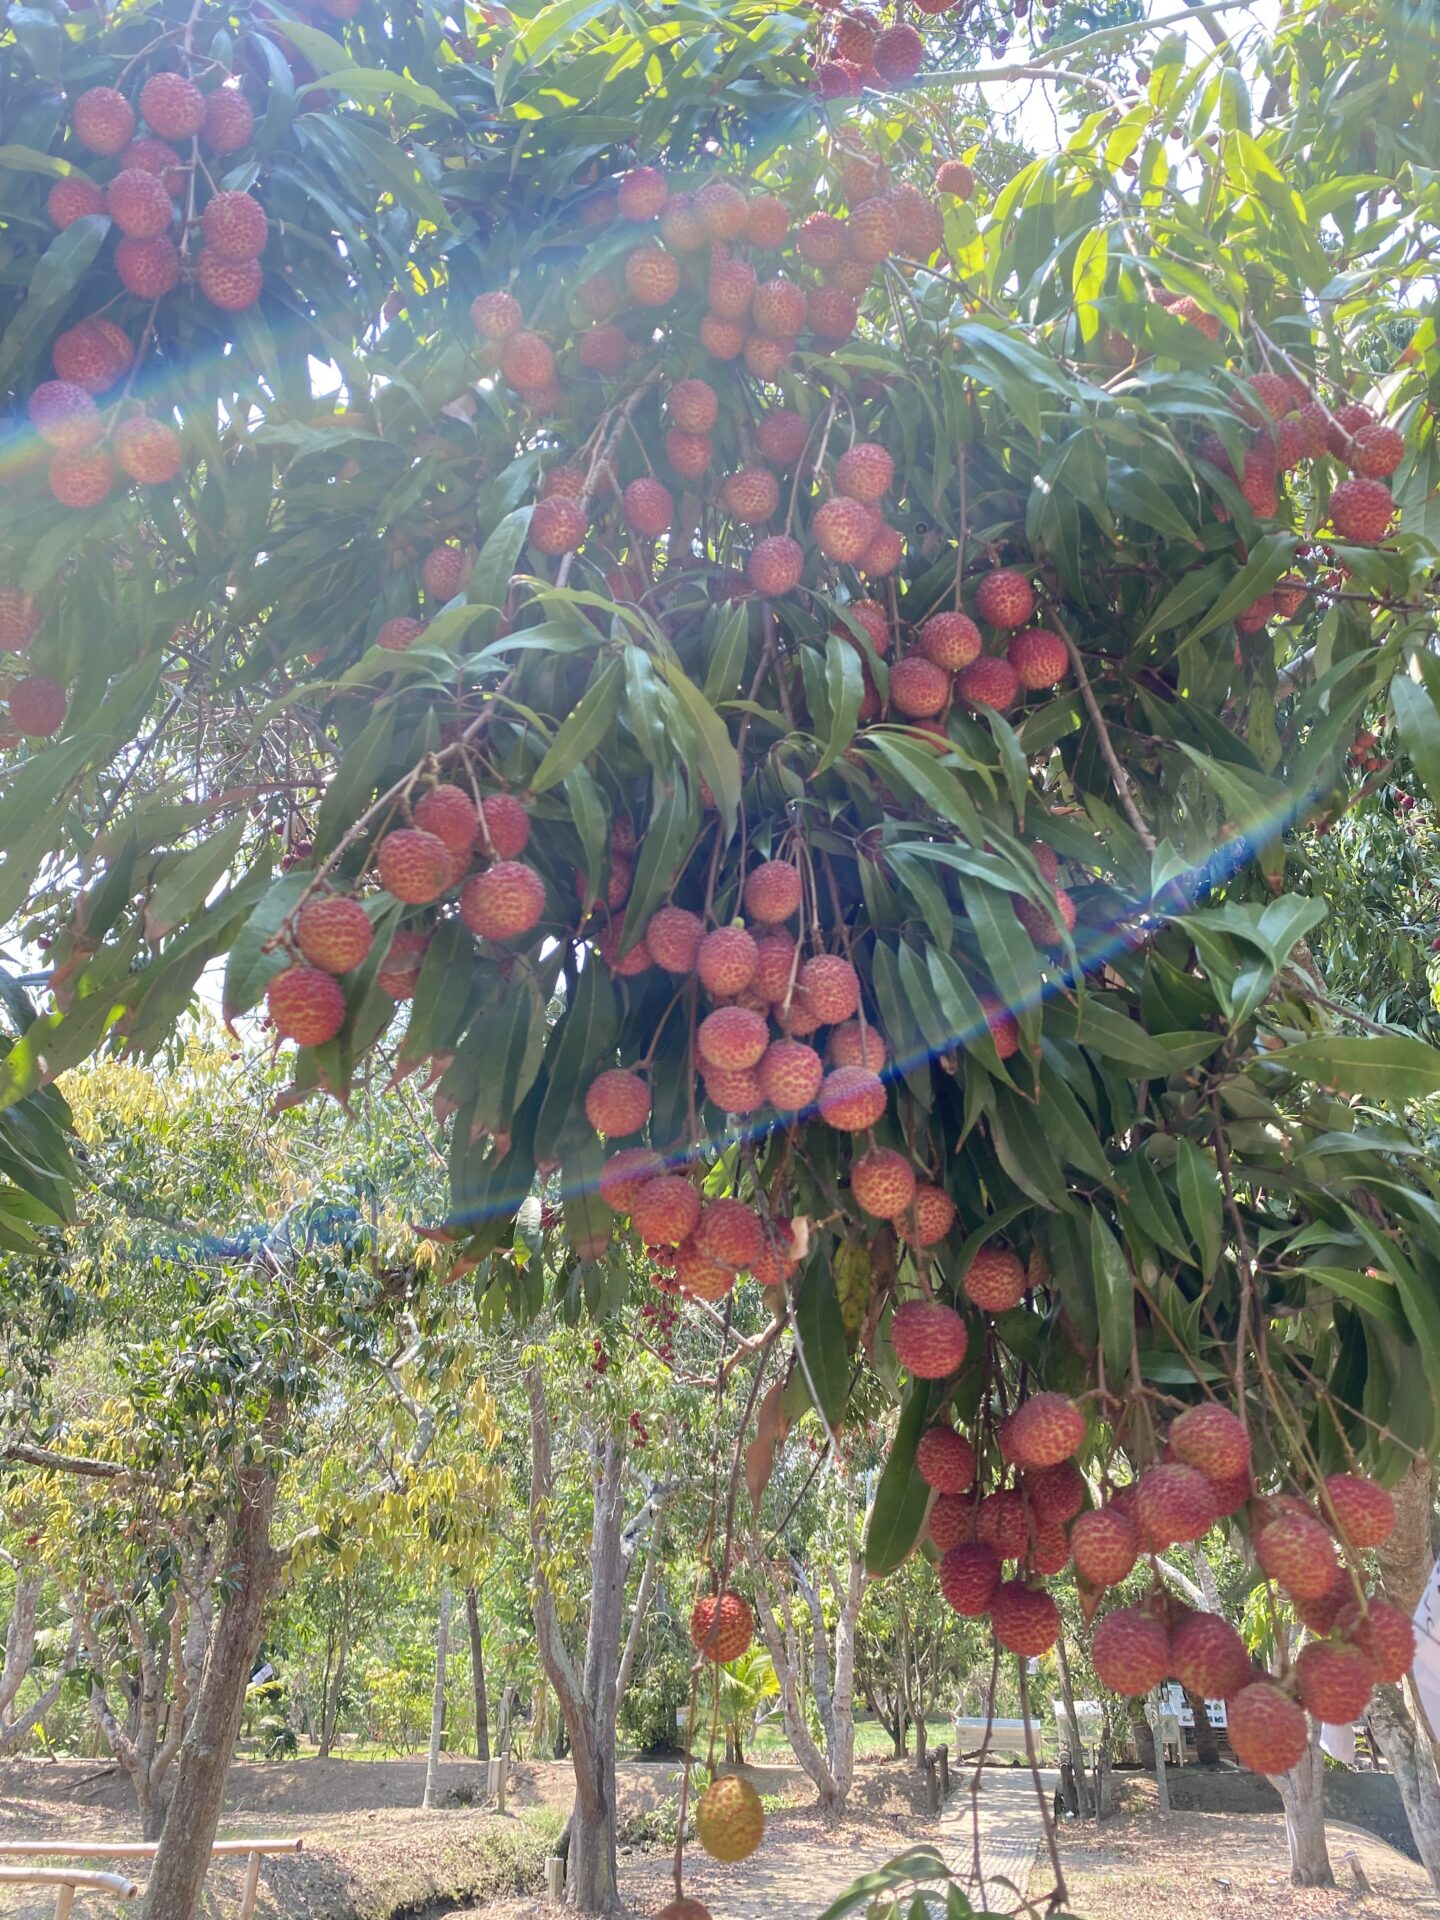 Amphawa lychees planted in the Amphawa Chaipattananurak Conservation Project (Photo: Anya C.)